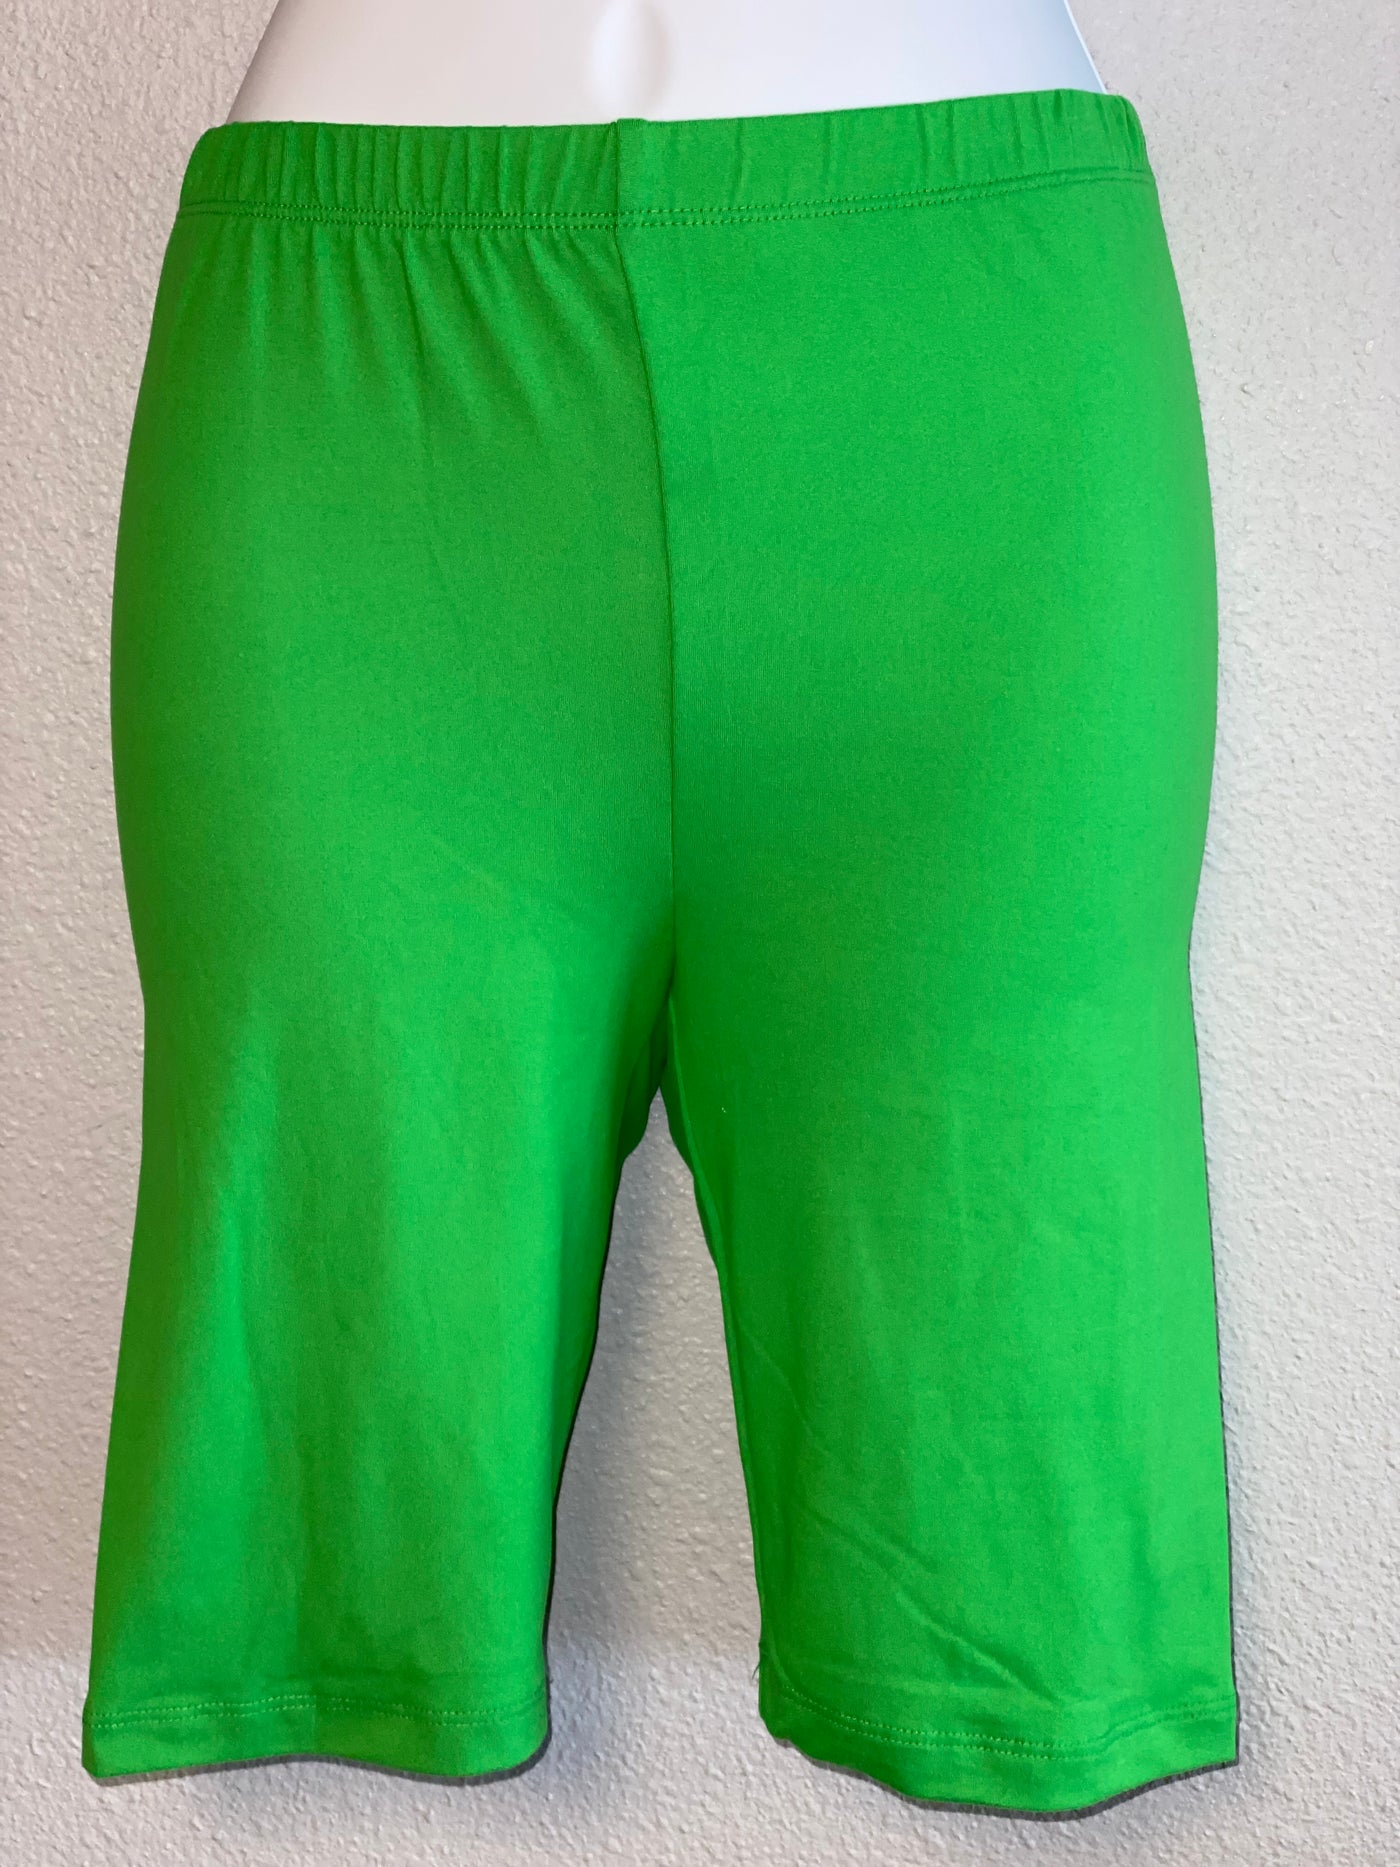 Neon Bright Green Biker Shorts